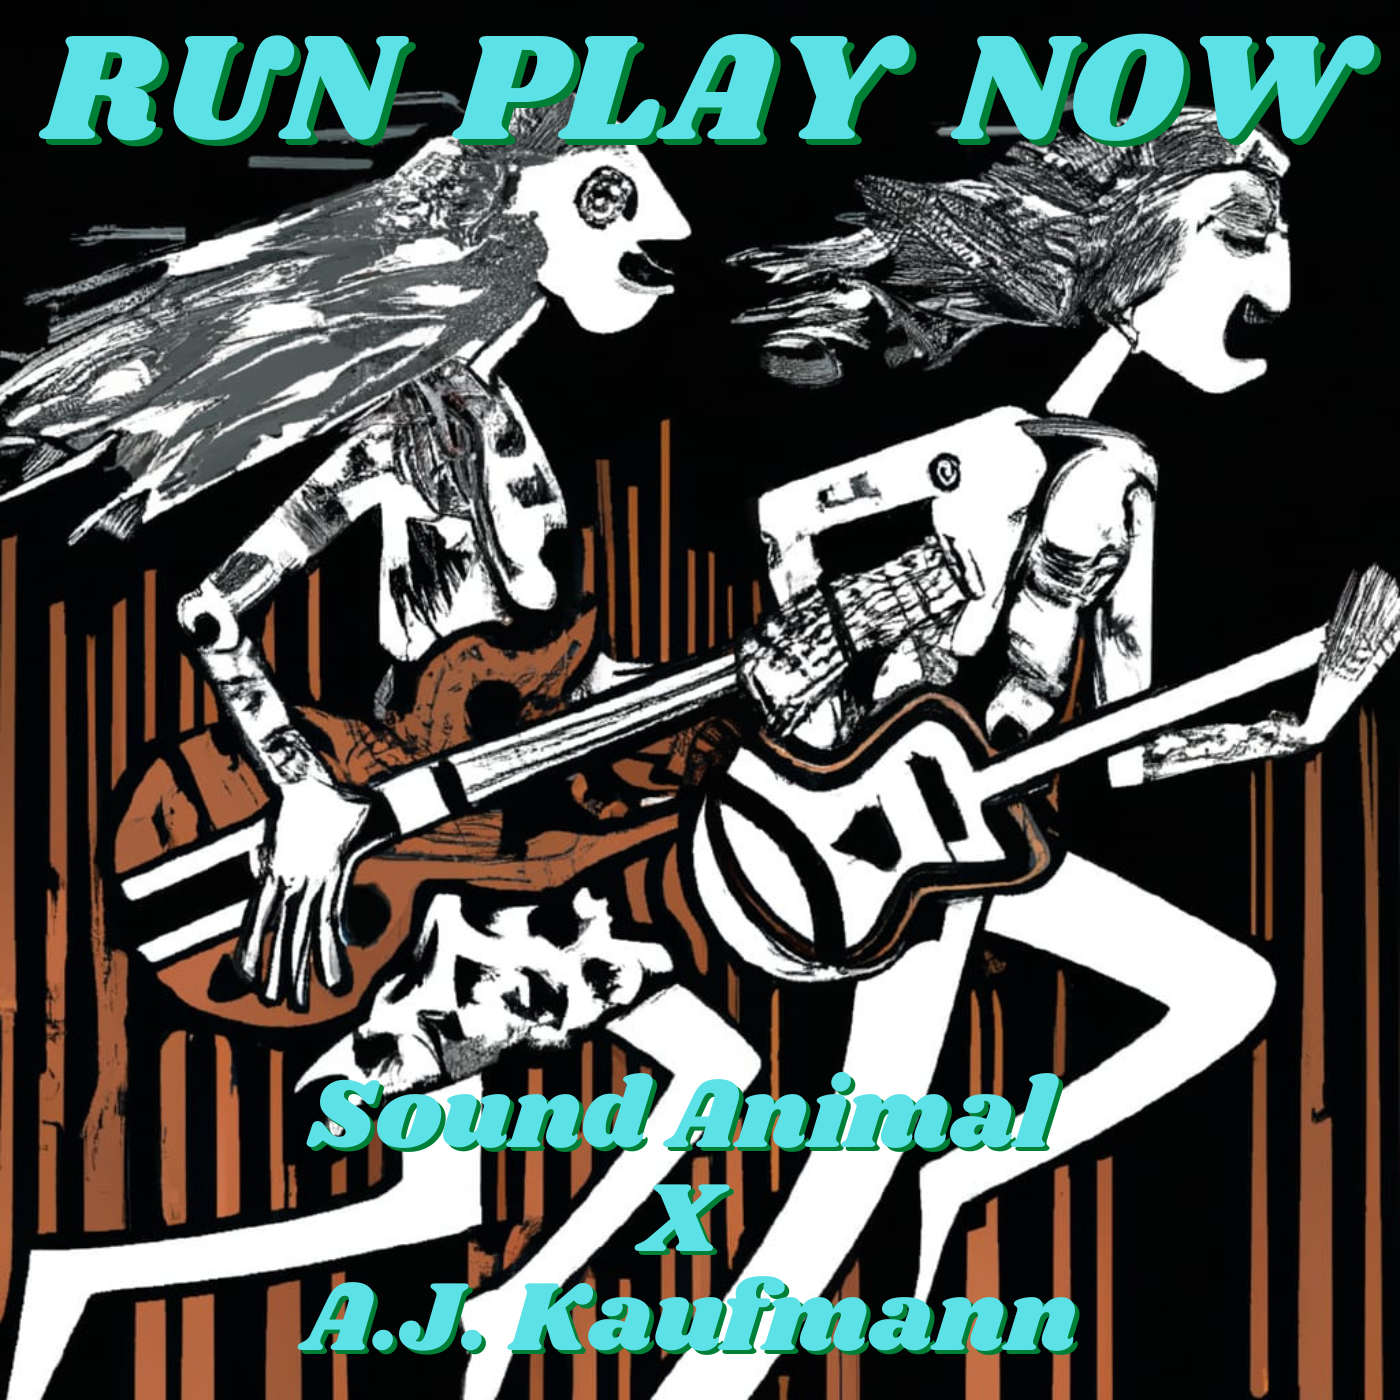 Sound Animal & A.J. Kaufmann Will Release New Album, Run Play Now, on November 28th